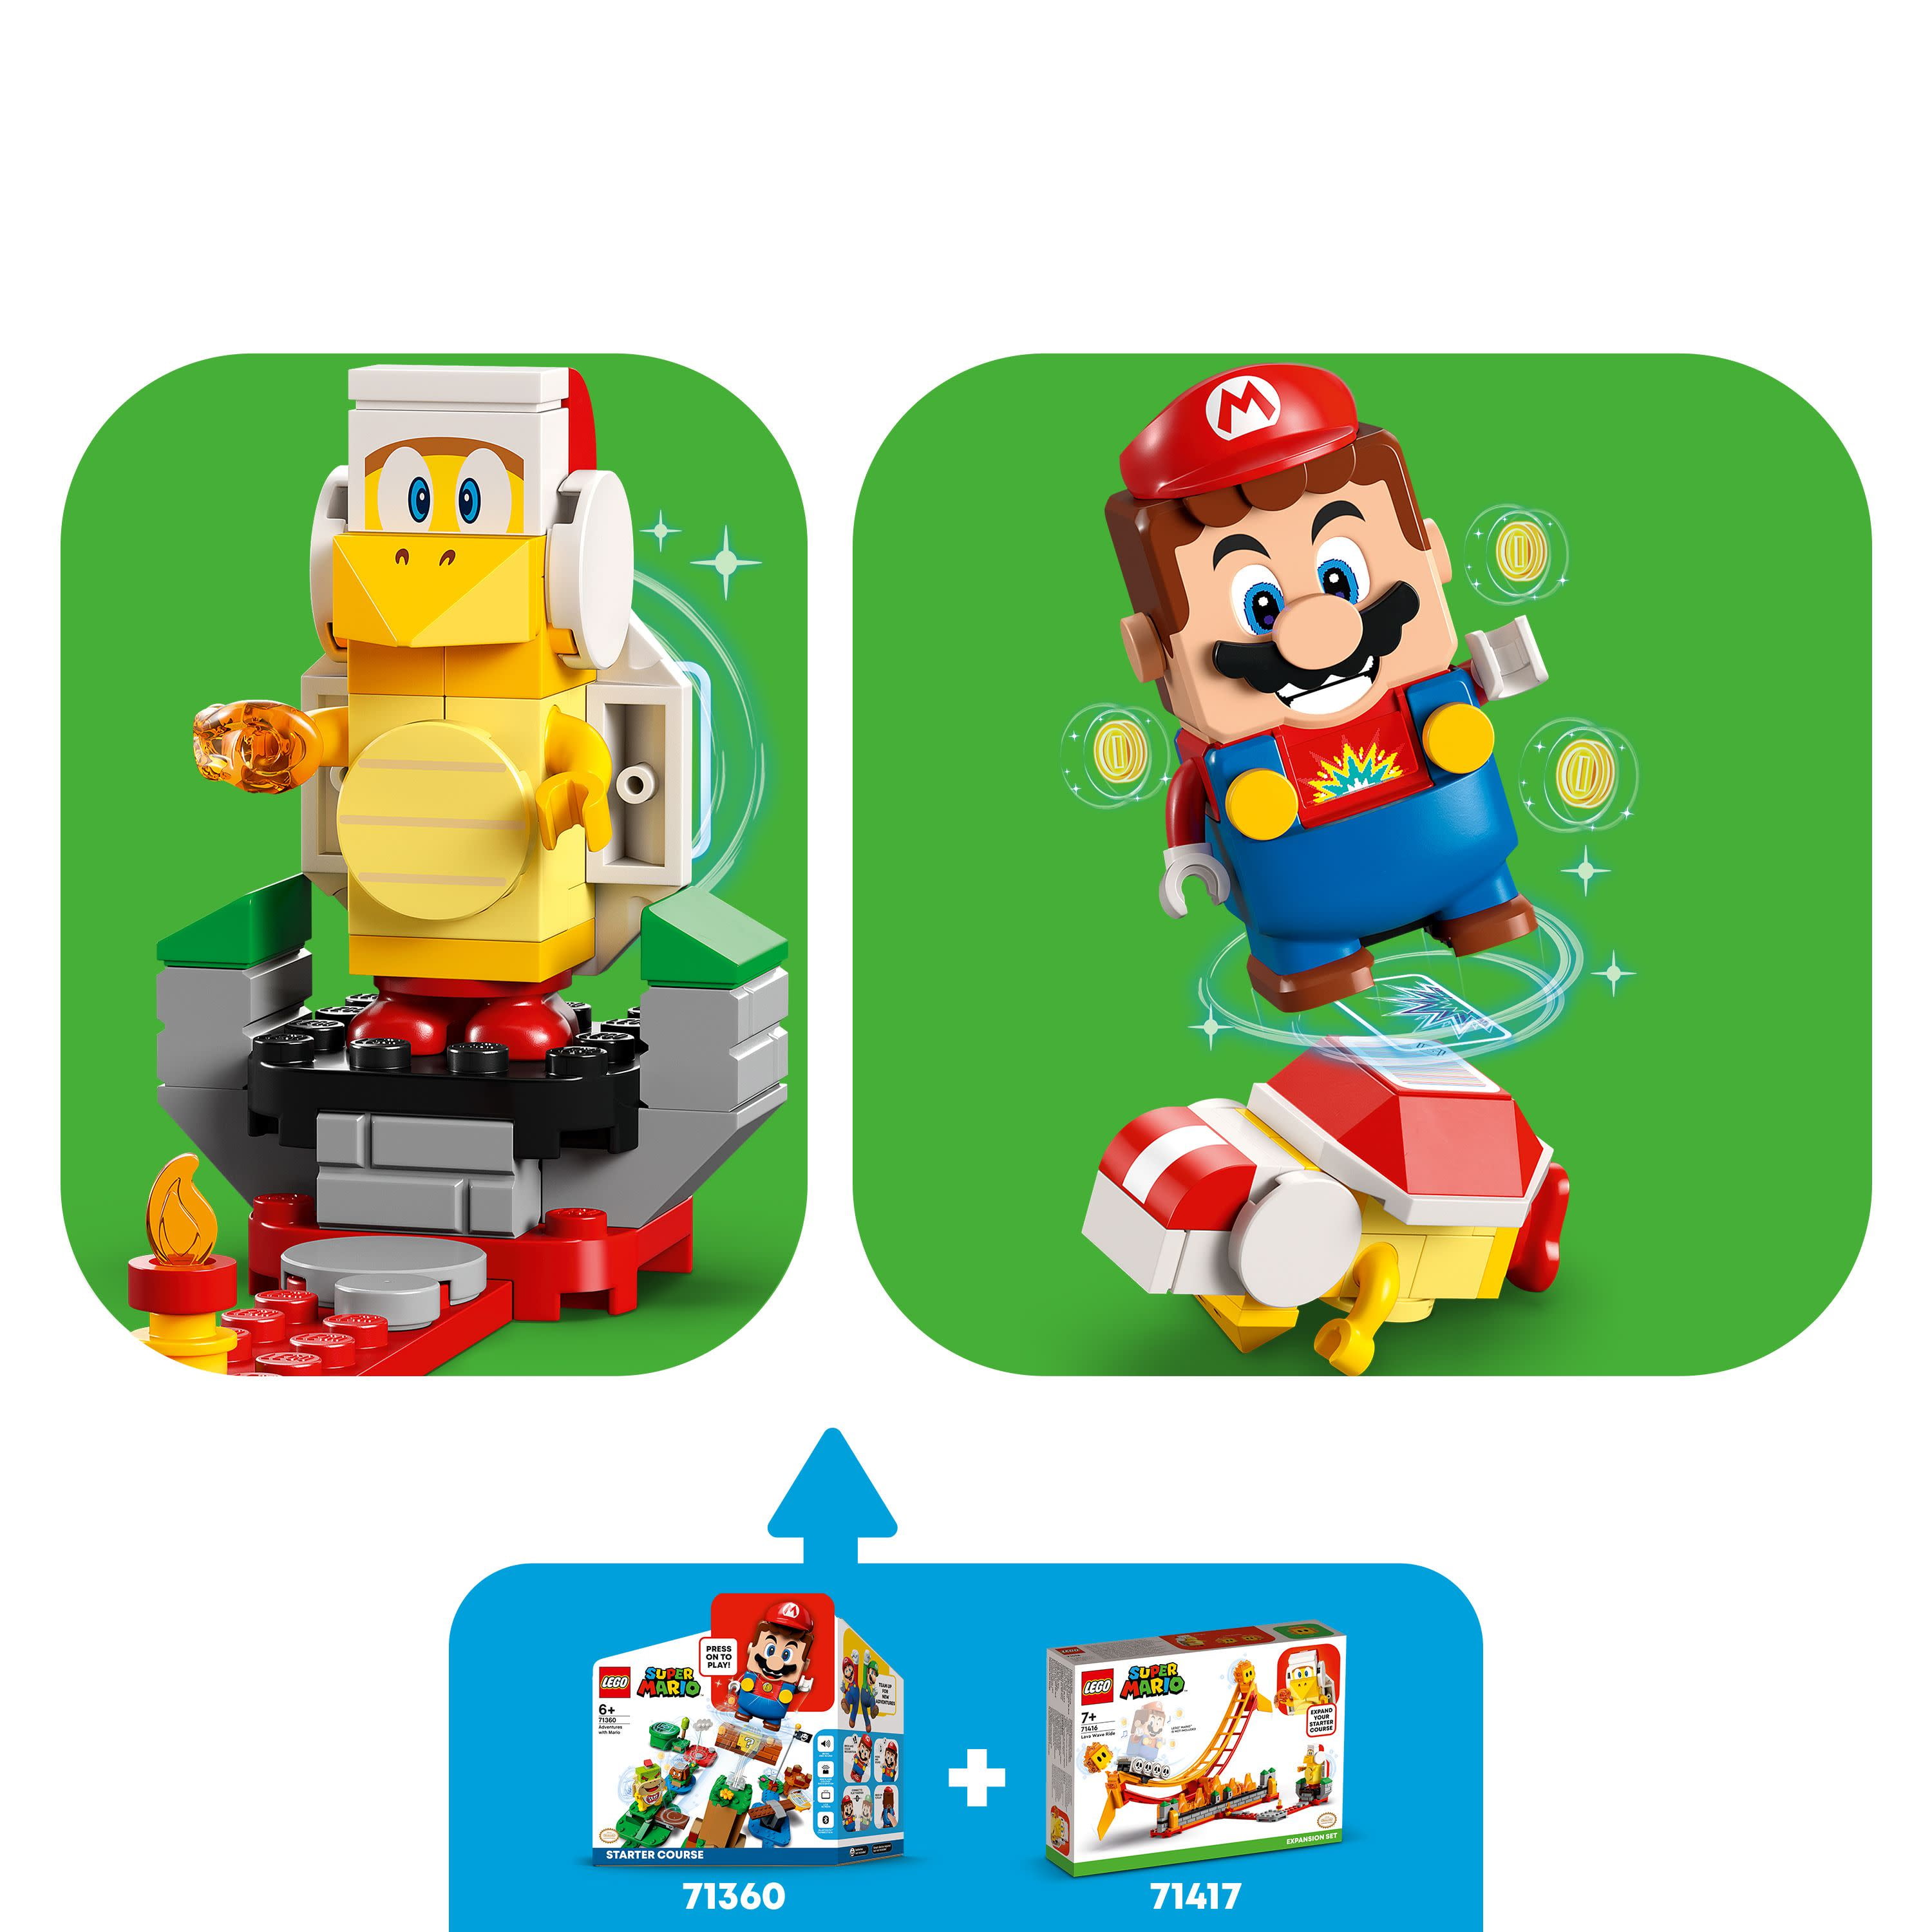 New Super Mario Bros. Lego sets - Fanboys Marketplace